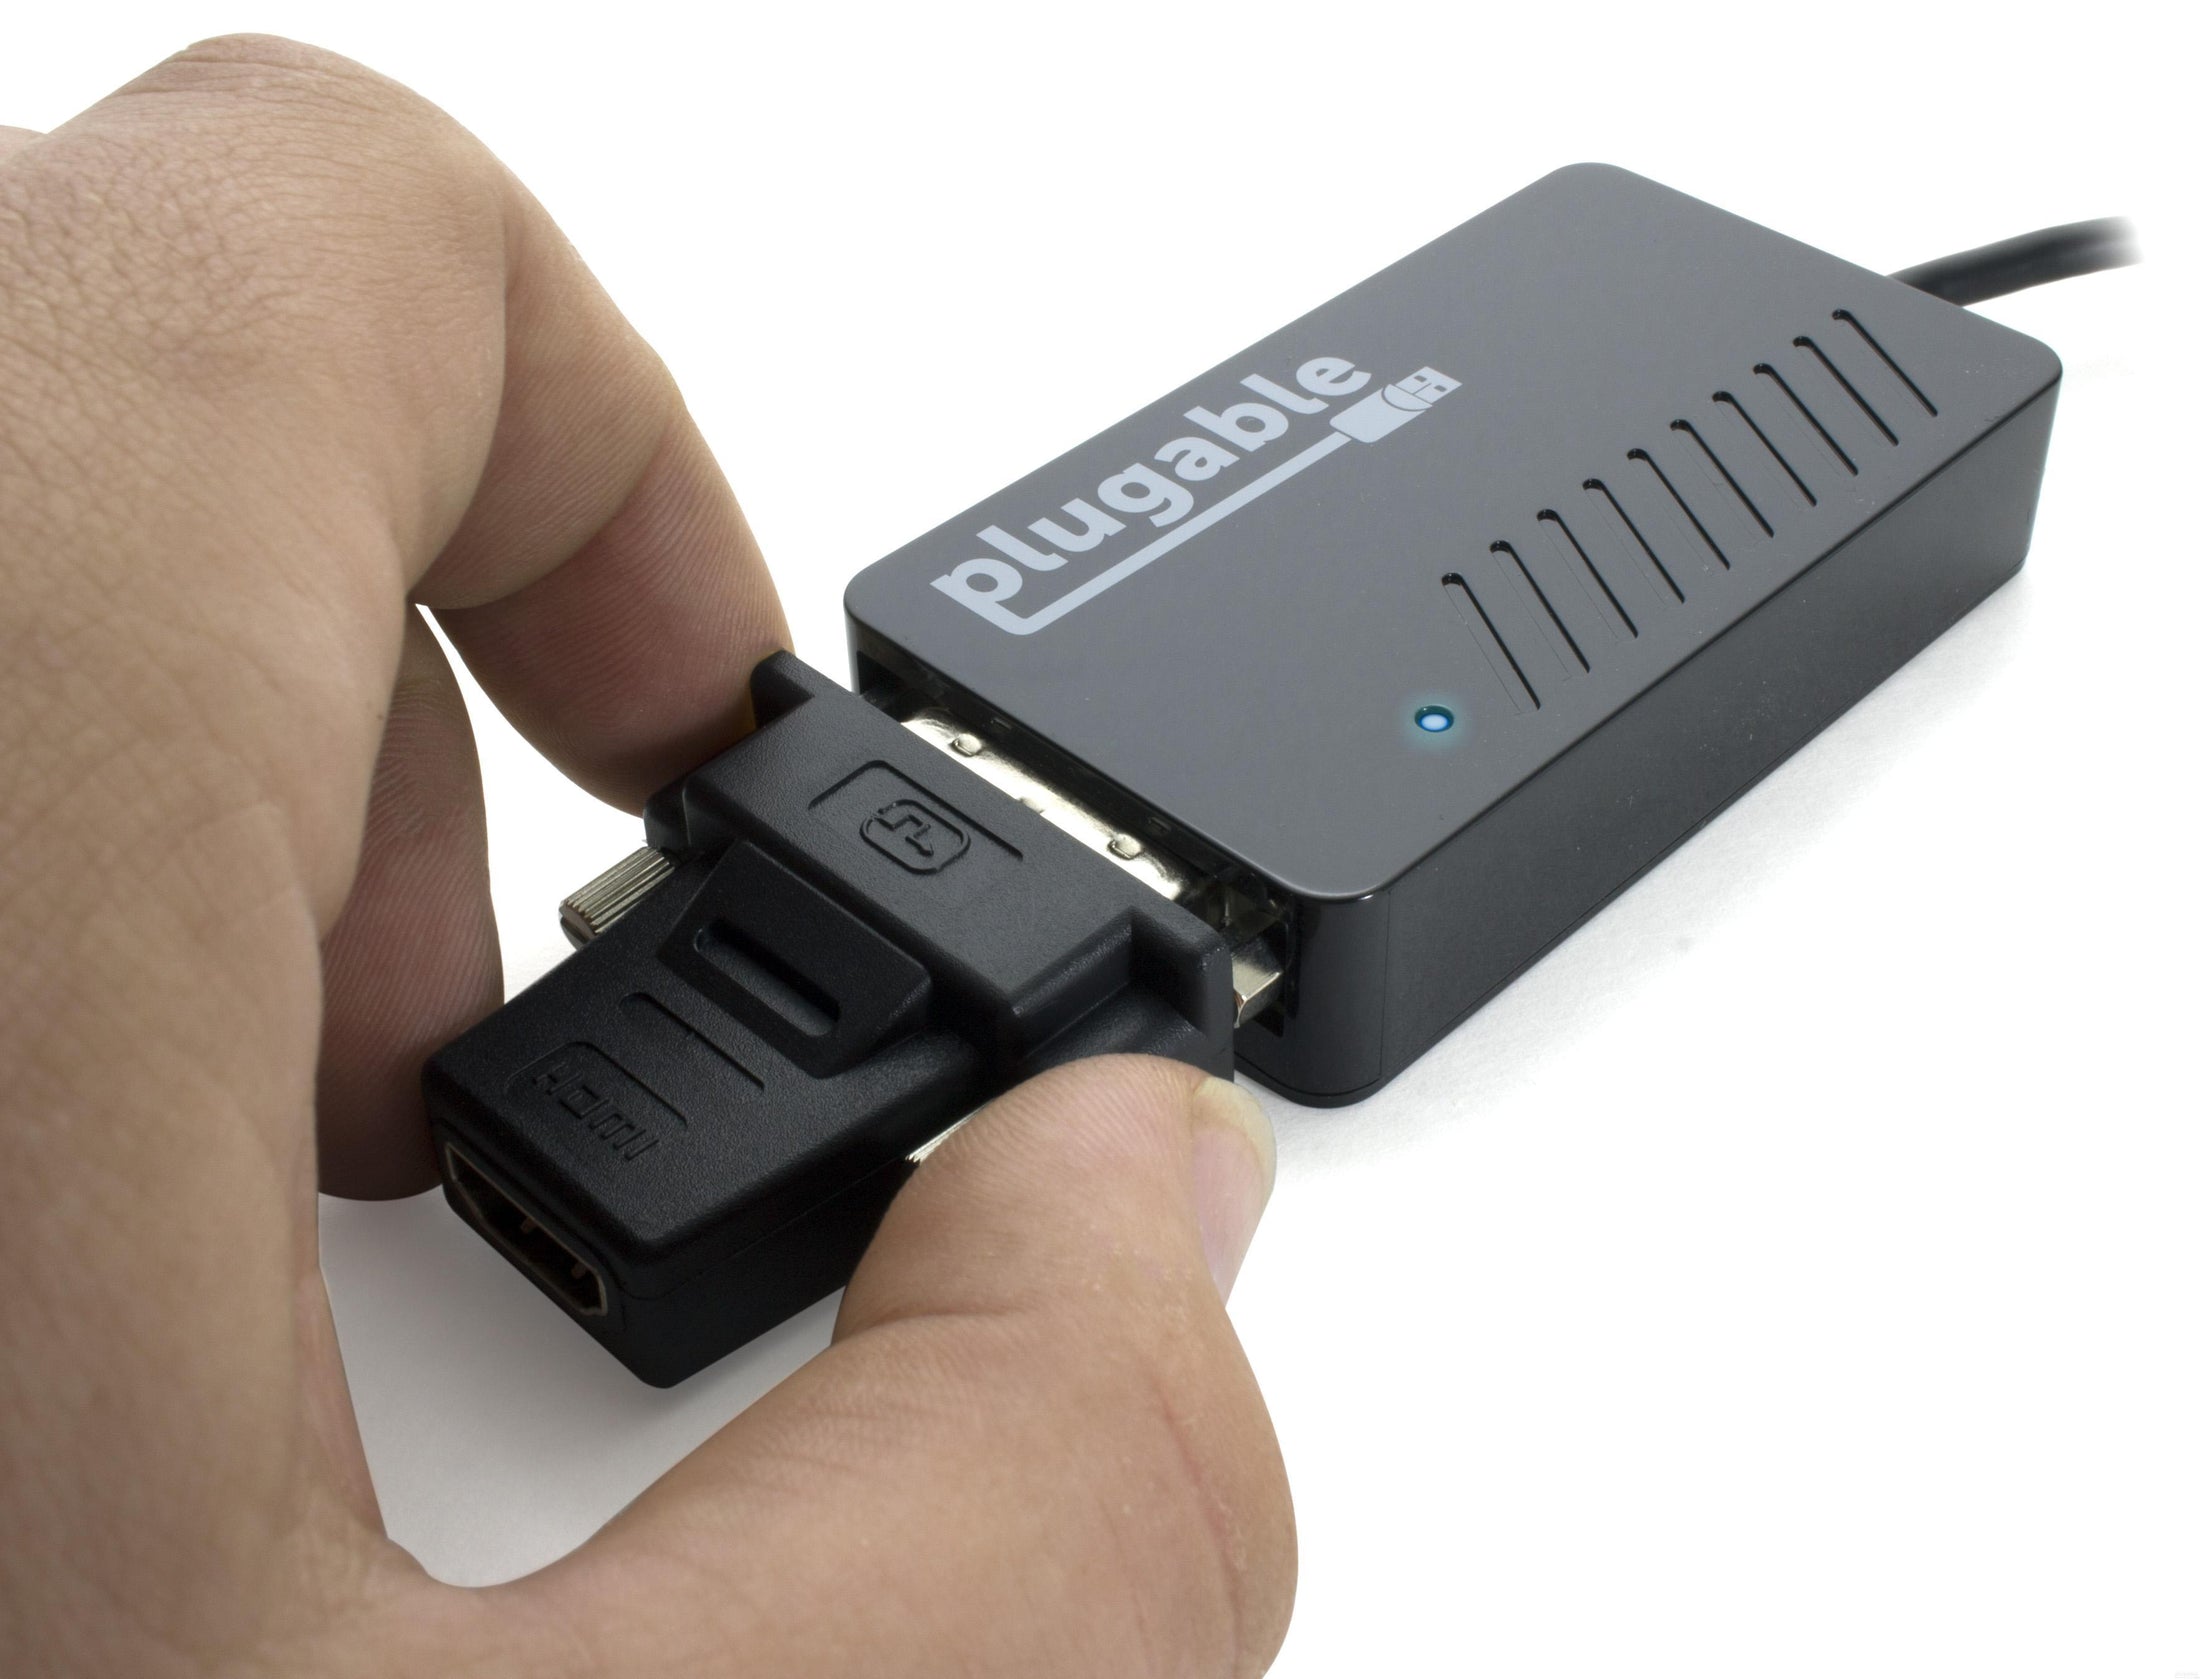 Plugable USB 3.0 4K HDMI Adapter for Multiple Monitors